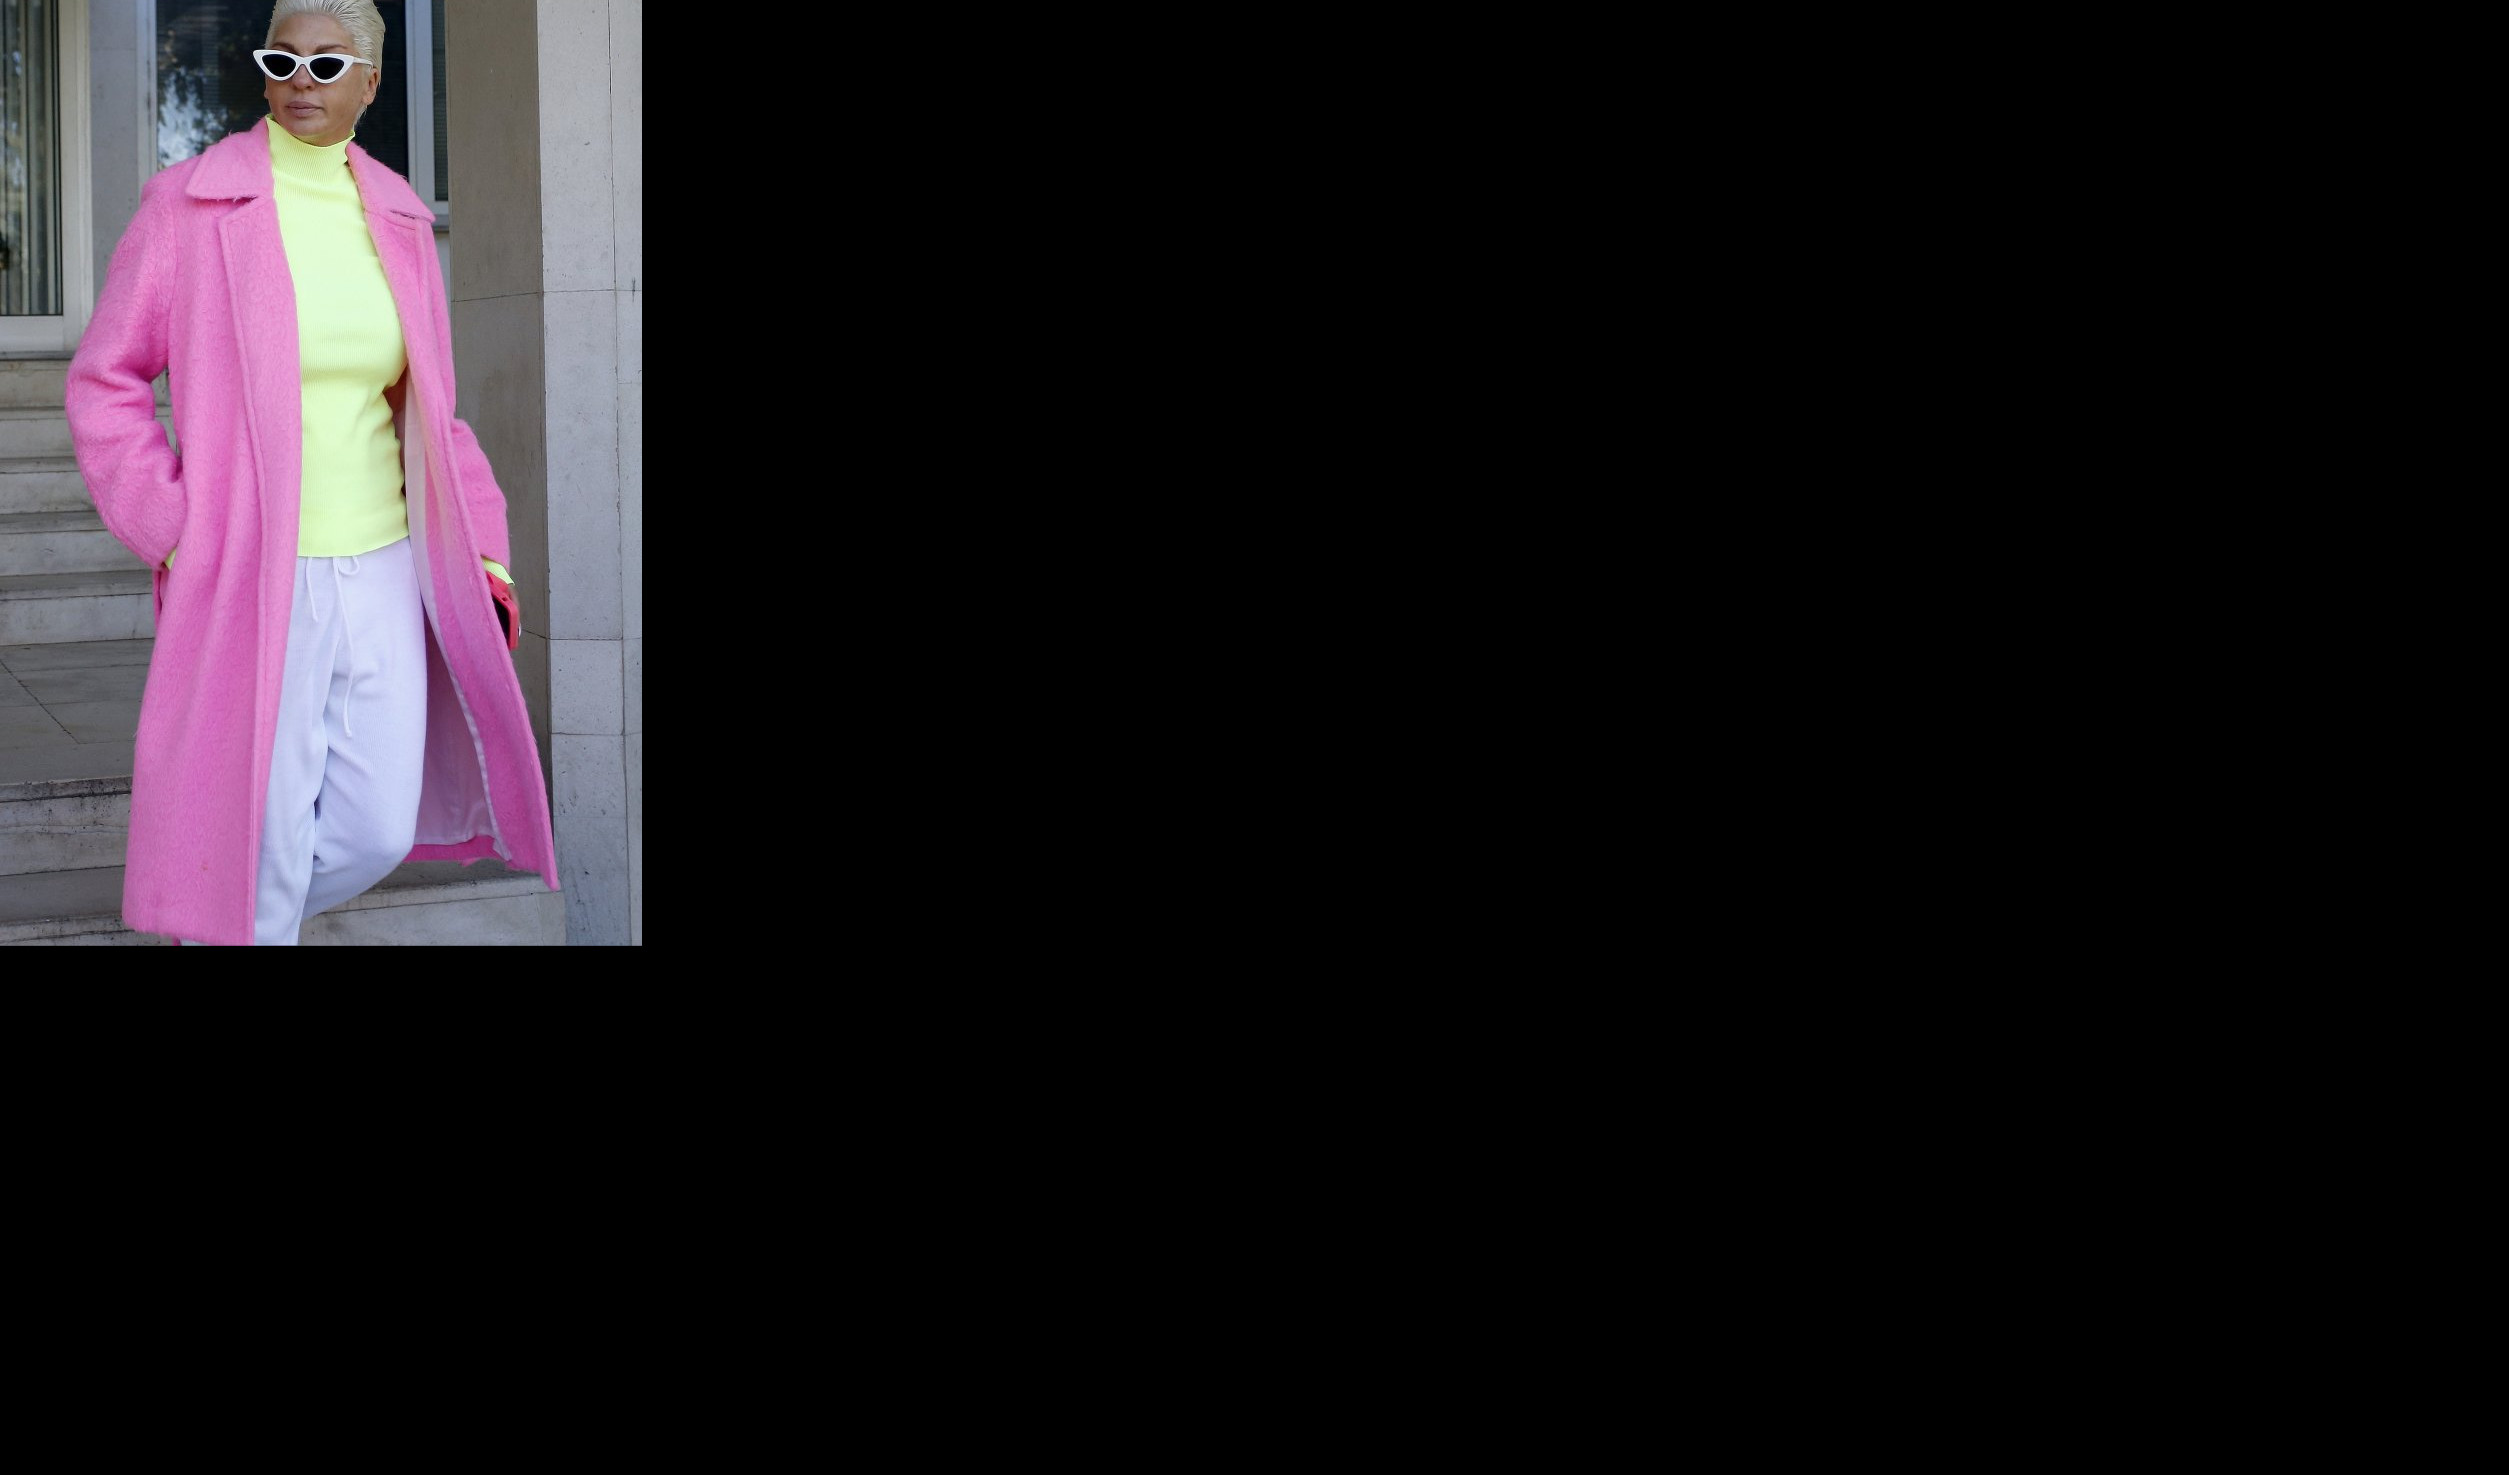 KARLEUŠIN SEKSI SNIMAK POTOPIO INTERNET! Jelena se utegla u roze triko i pohvalila da je smršala, SVE KIPI I PUCA! (VIDEO)